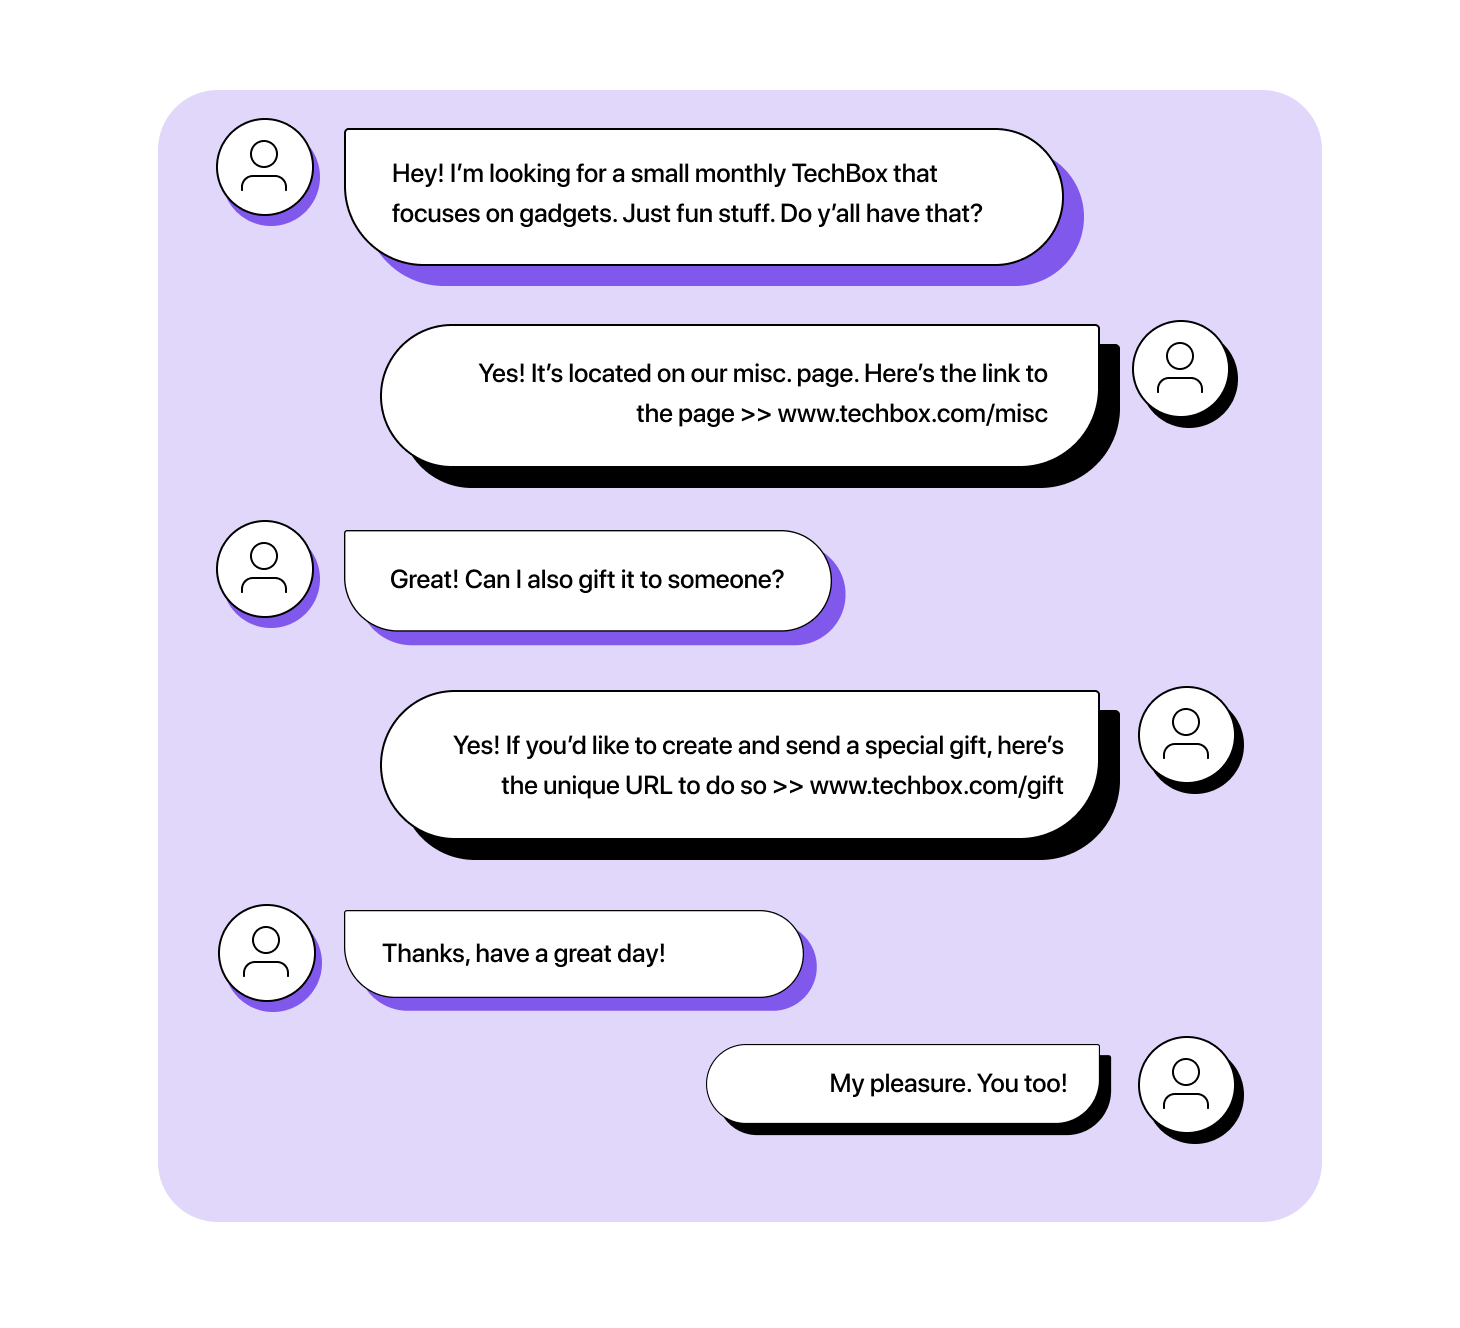 Illustration of a conversational sales conversation via text